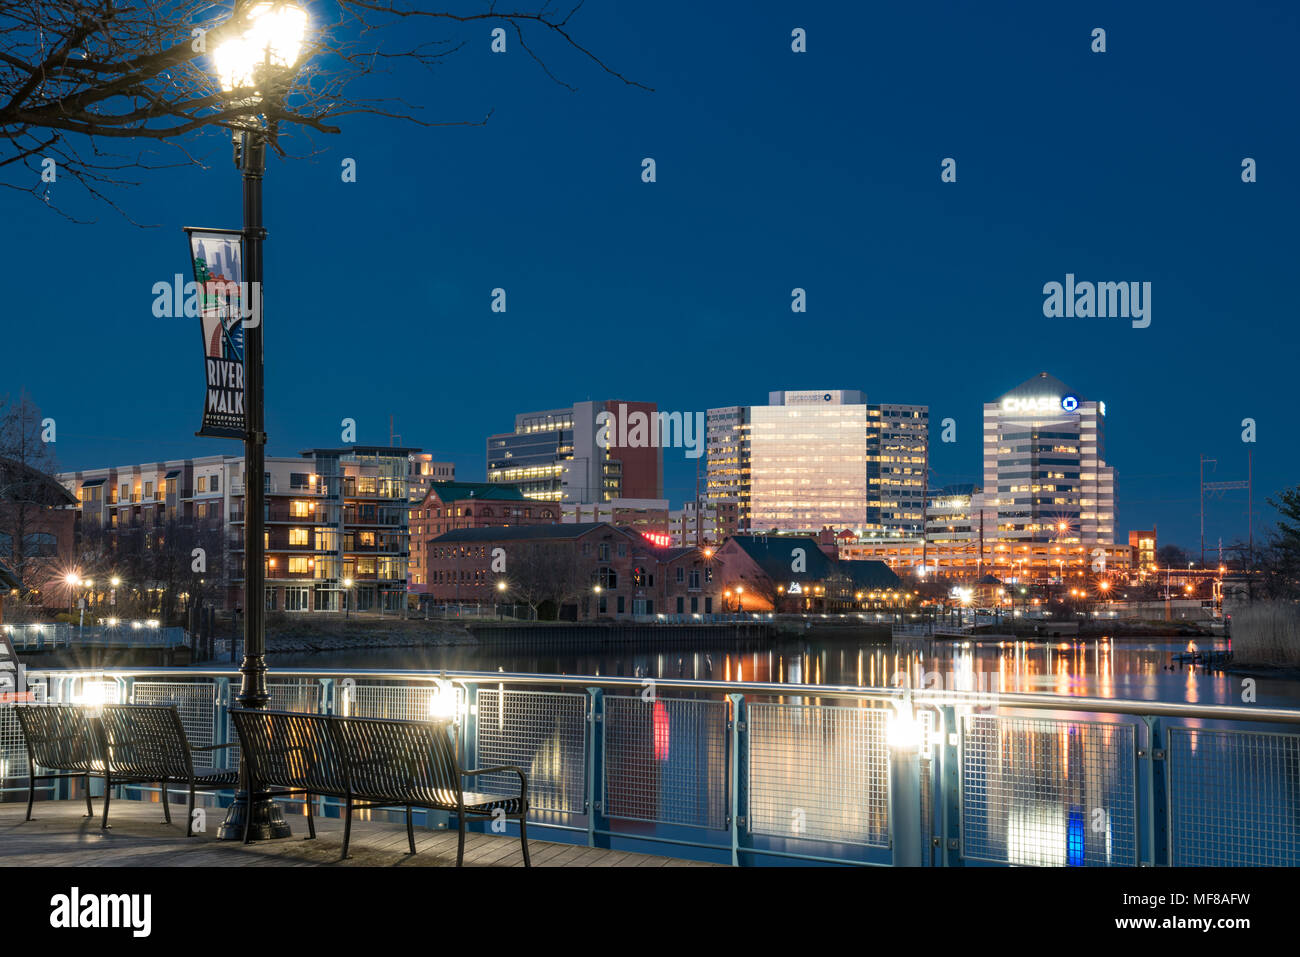 WILMINGTON, DE - April 5, 2018: Wilmington, Delaware Riverwalk und Skyline entlang der Christiana River bei Nacht Stockfoto